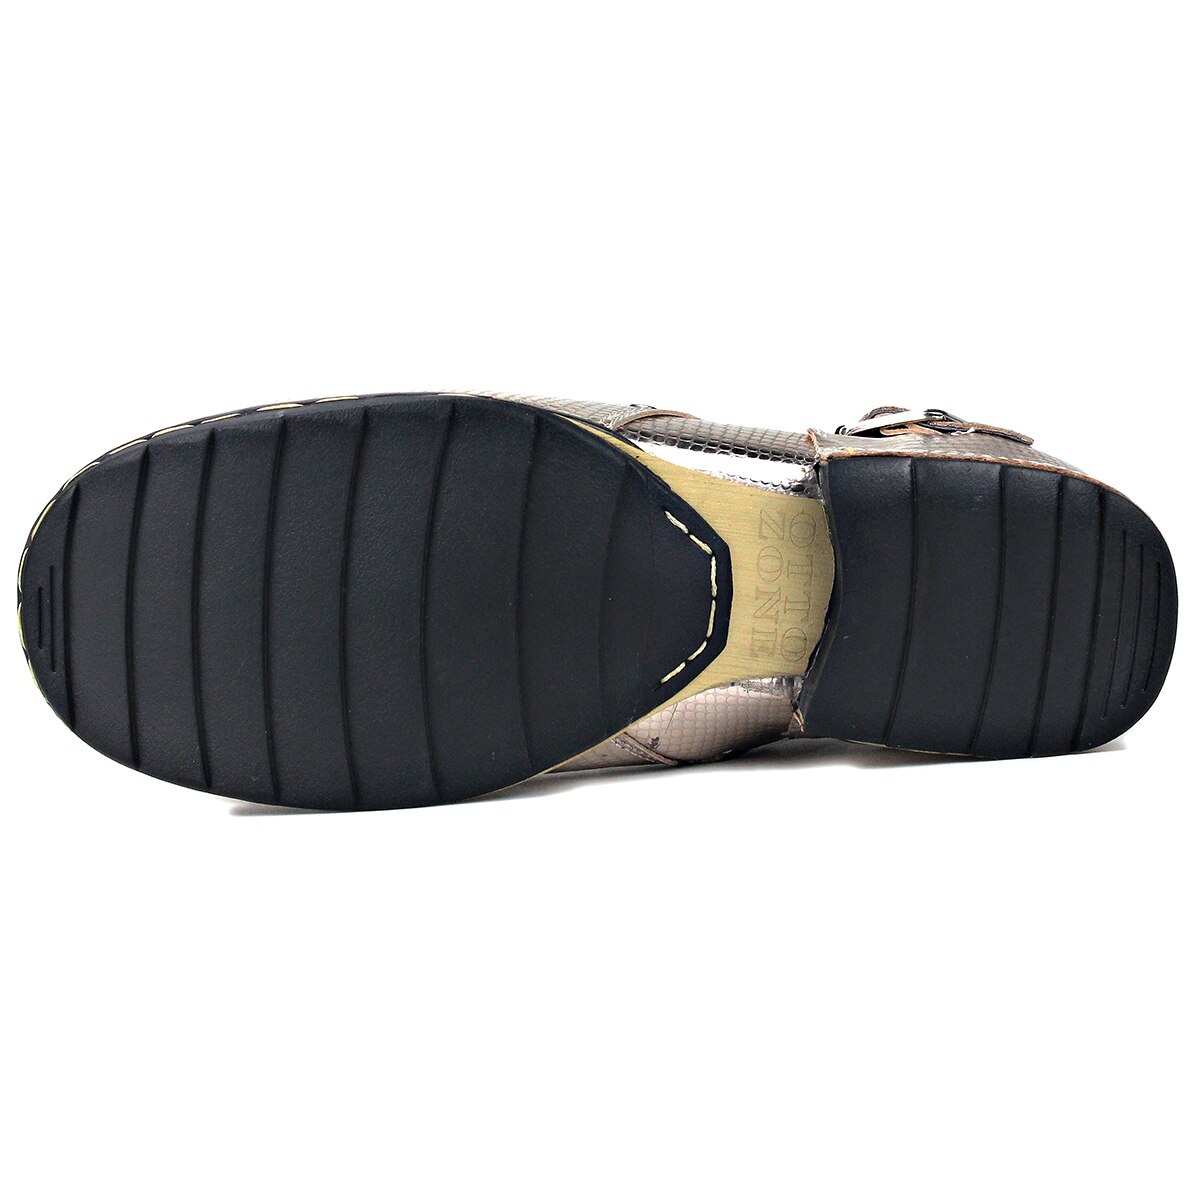 Zipper Golden Genuine Leather Chukka Boots